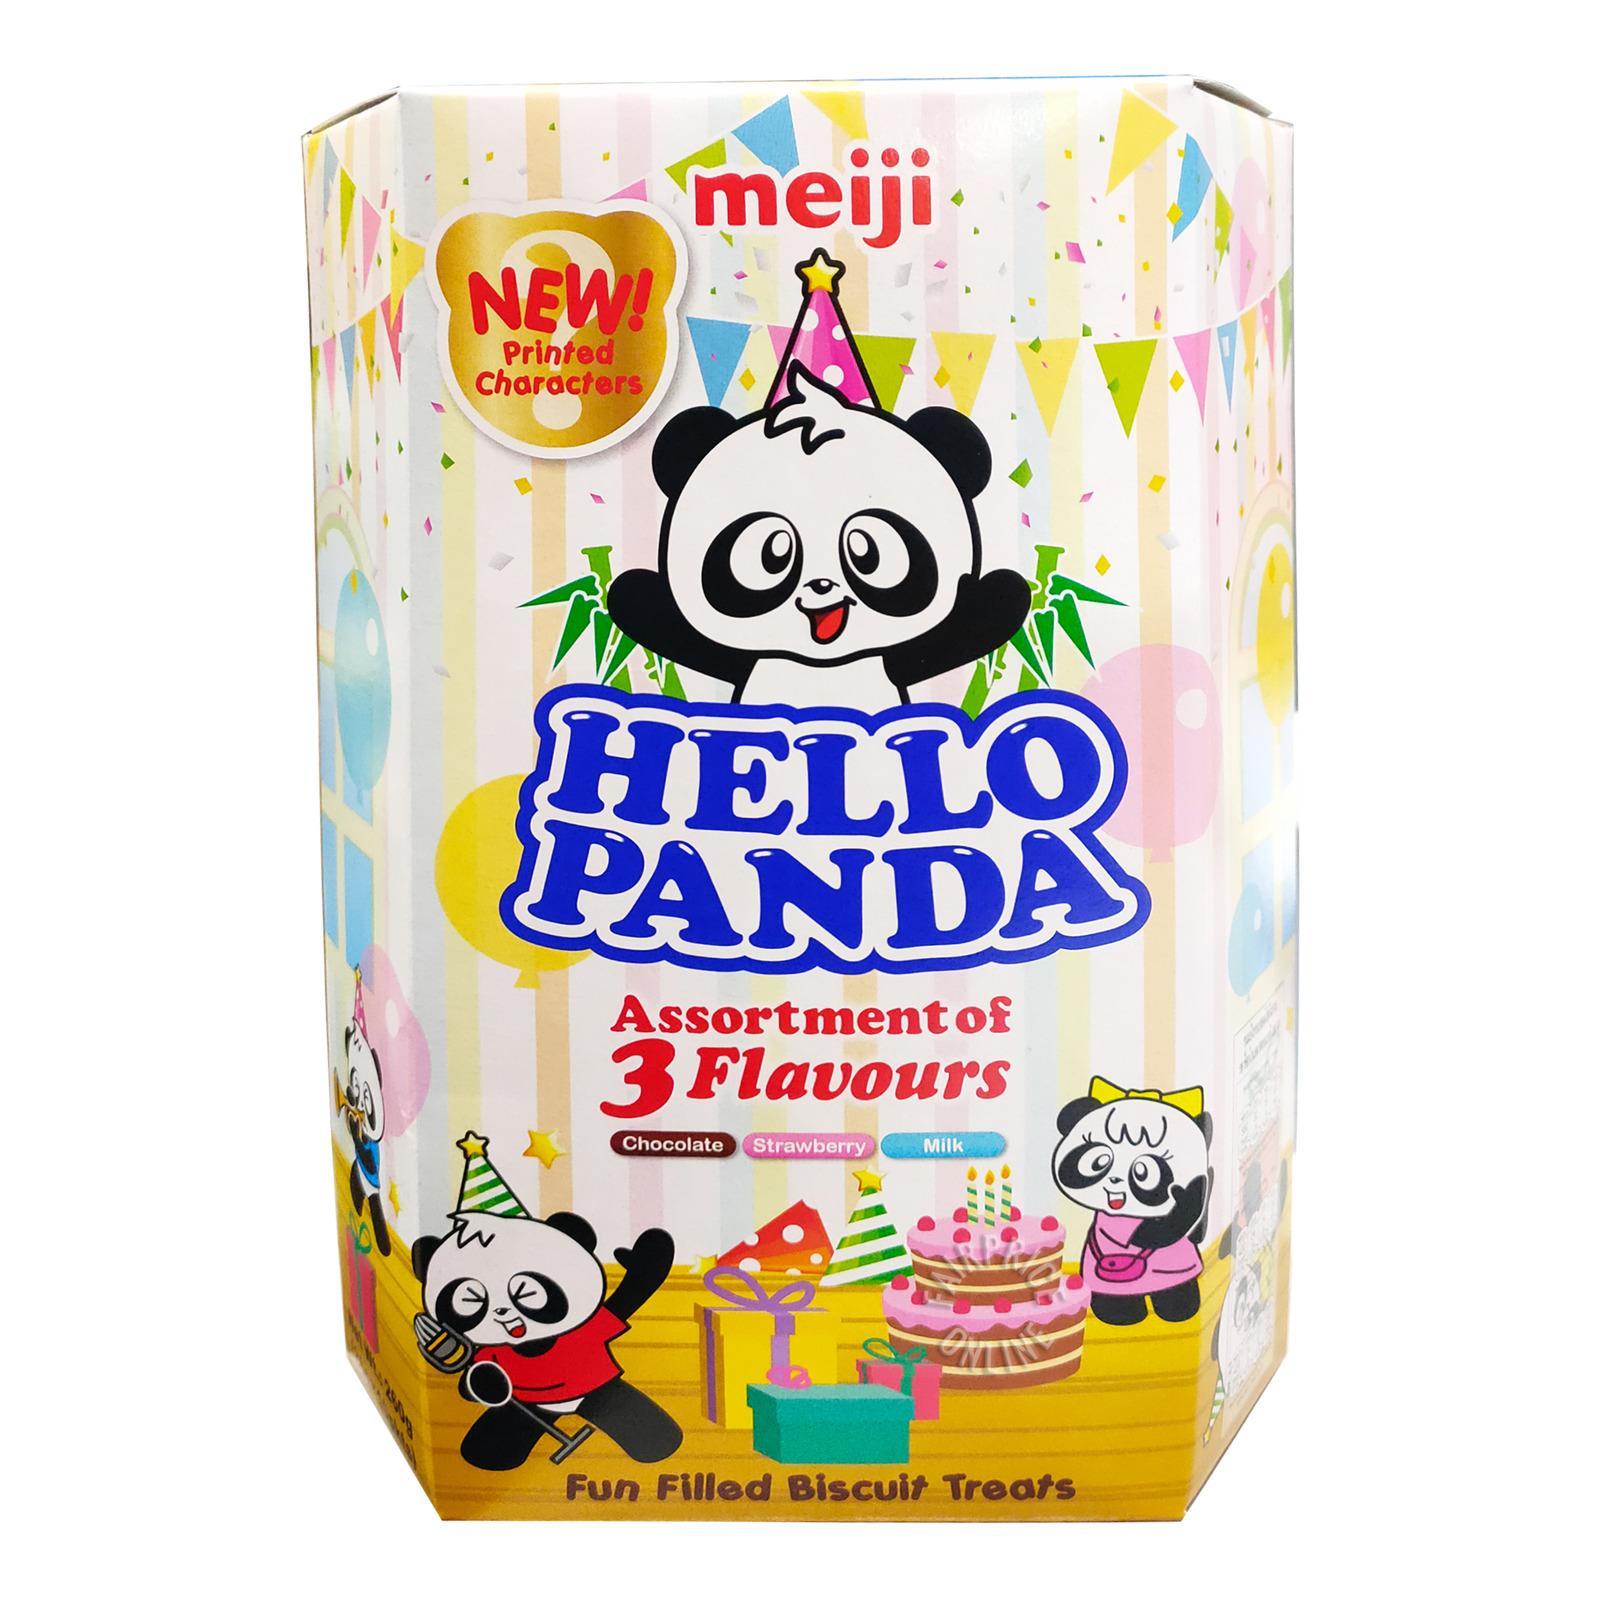 Hello Panda - Assorted Box 10 packets Chocolate/Strawberry/Milk